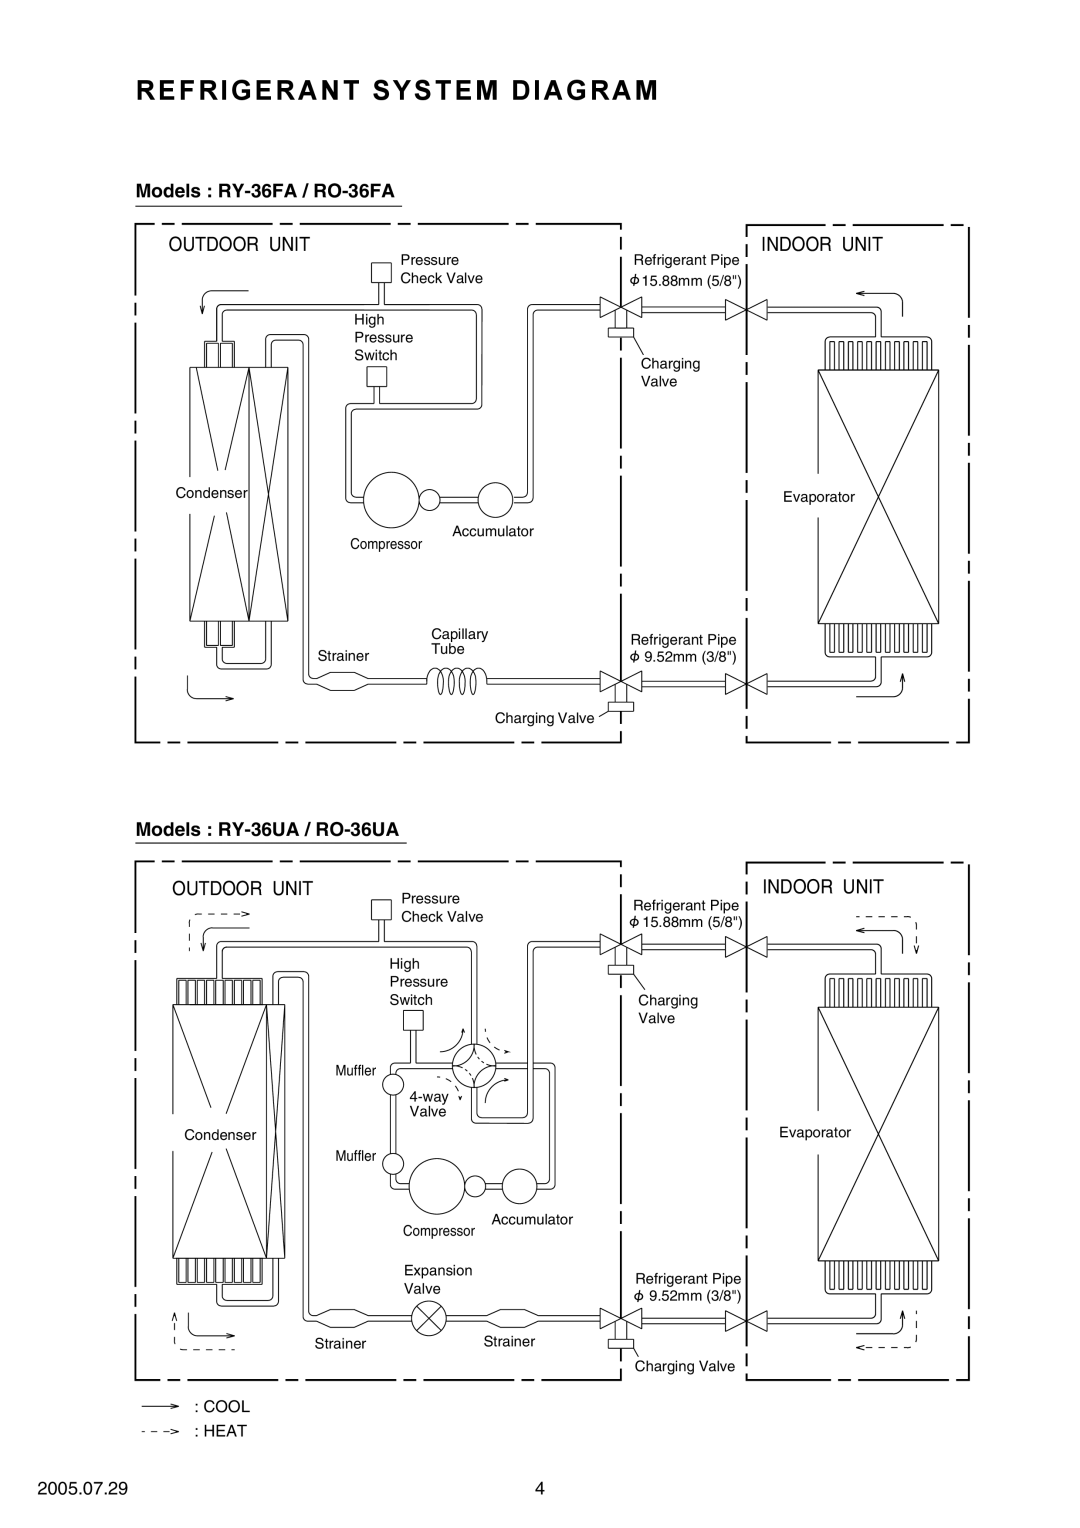 Fujitsu Refrigerant System Diagram, Models RY-36FA / RO-36FA, Models RY-36UA / RO-36UA, Outdoor Unit, Indoor Unit 